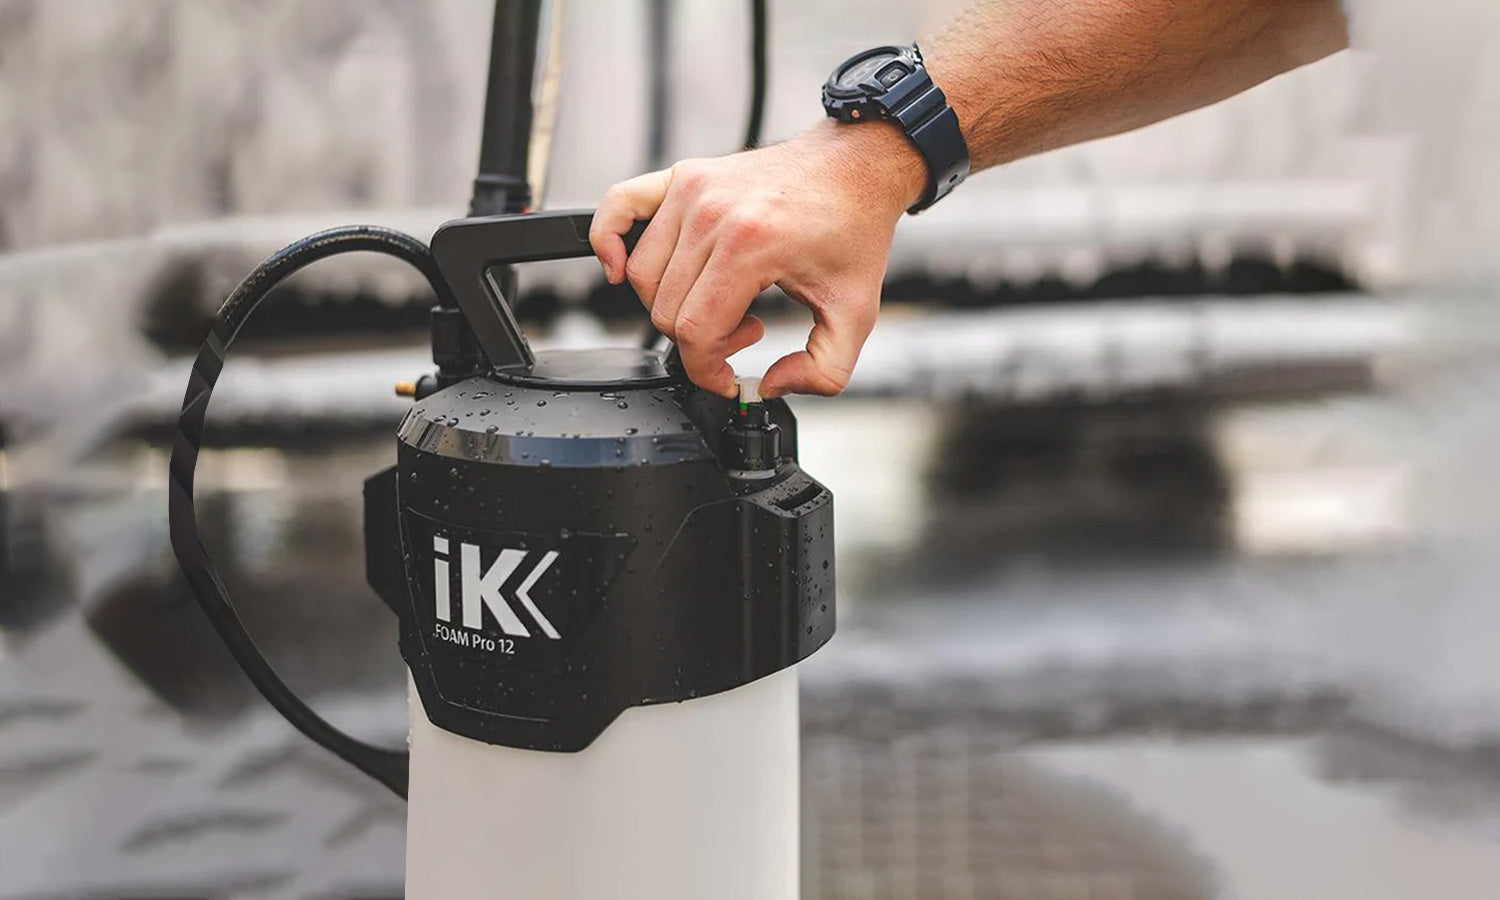 IK Foam Pro 12 Nozzle Kit